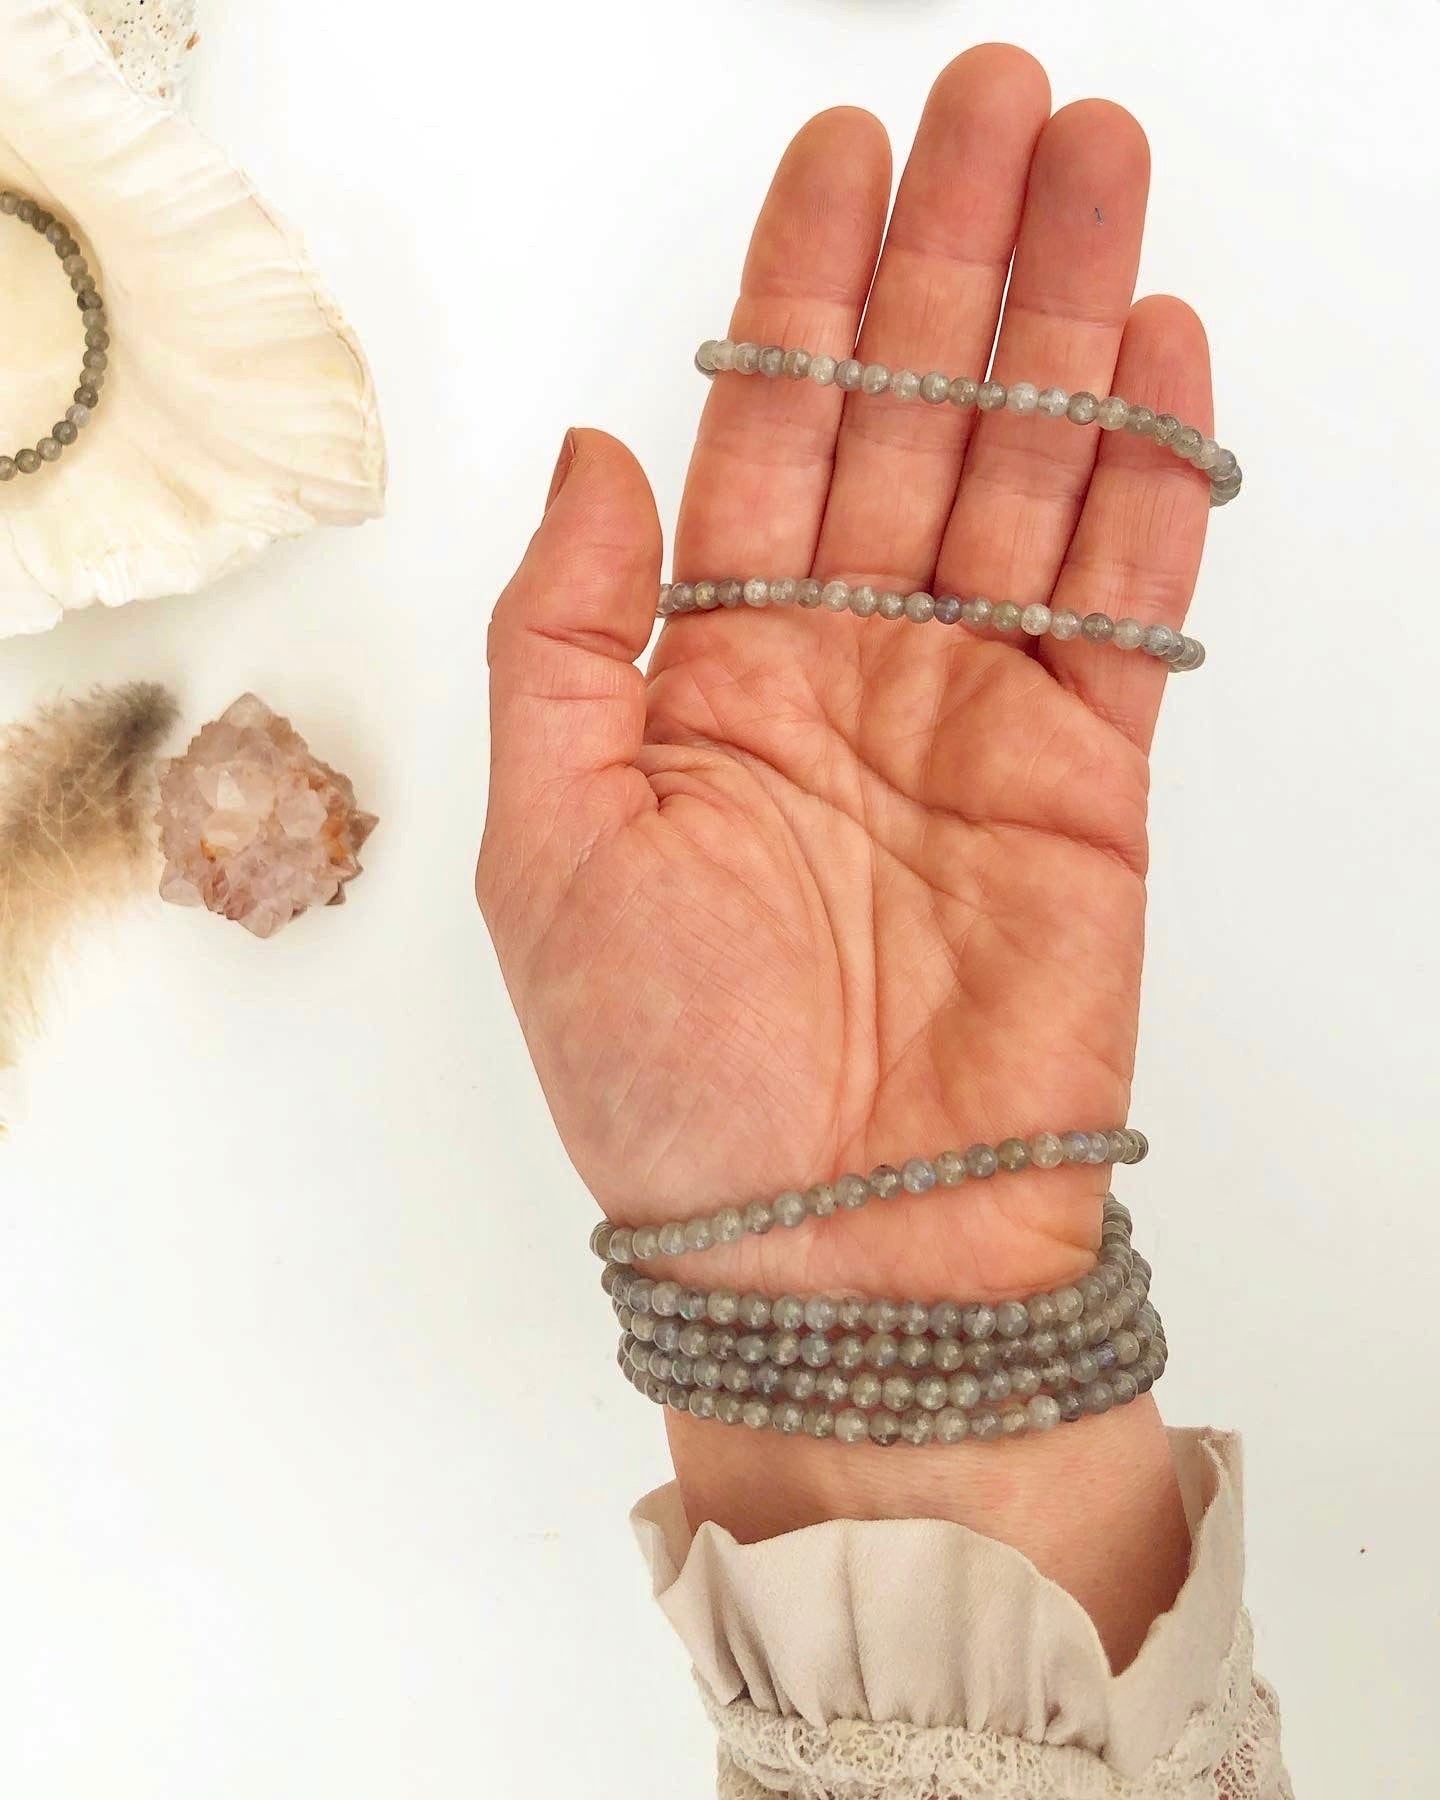 Labradorit Armbånd ☾ Spirituelle evner, styrke, transformation & beskyttelse ☾ (4mm)